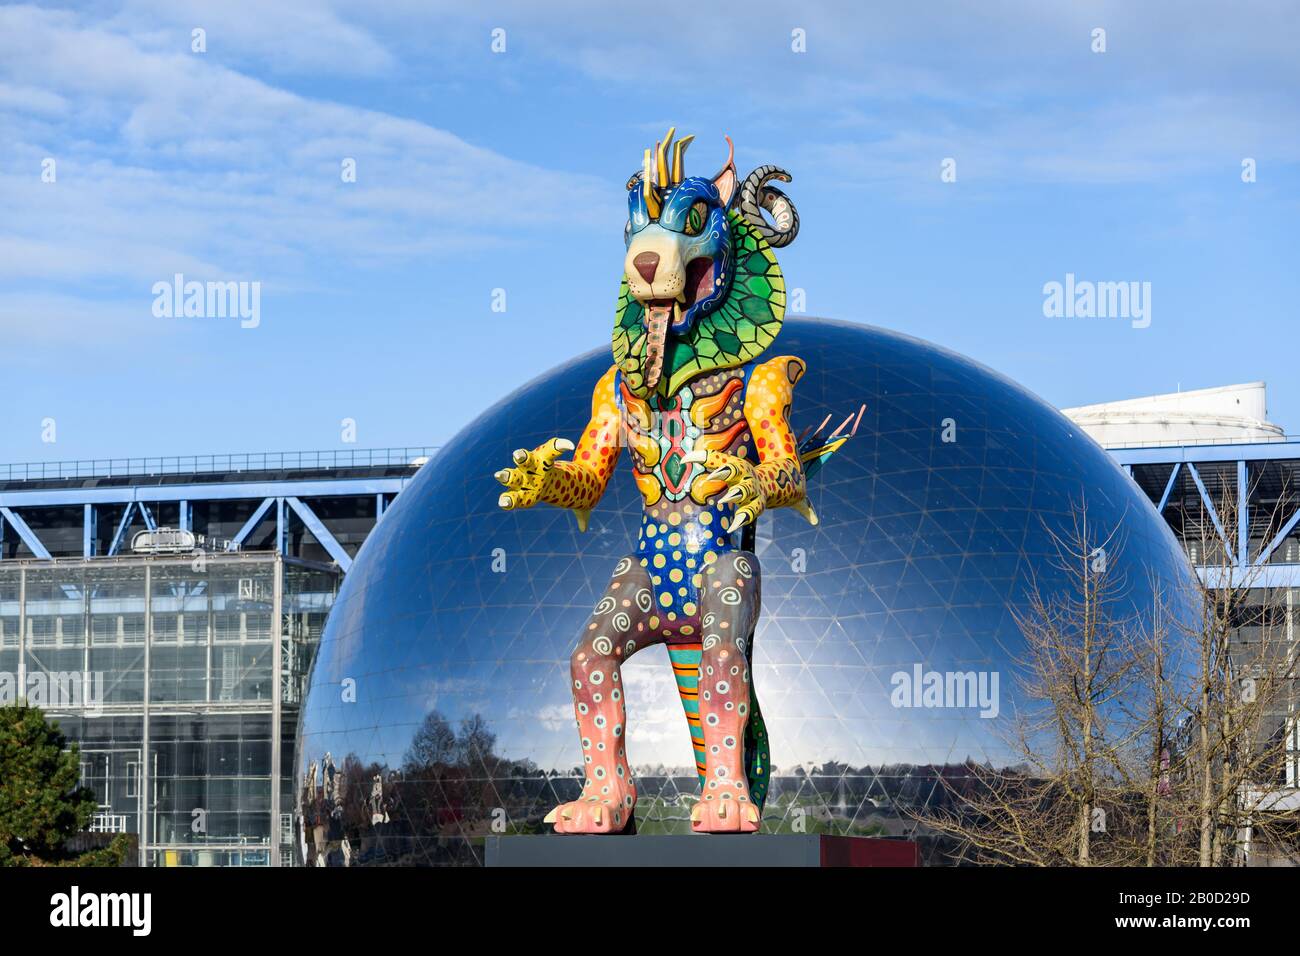 Mexican folk art brightly colored sculpture of fantastical creature called 'Alebrije' is exhibited in the Parc de la Villette in Paris. Stock Photo